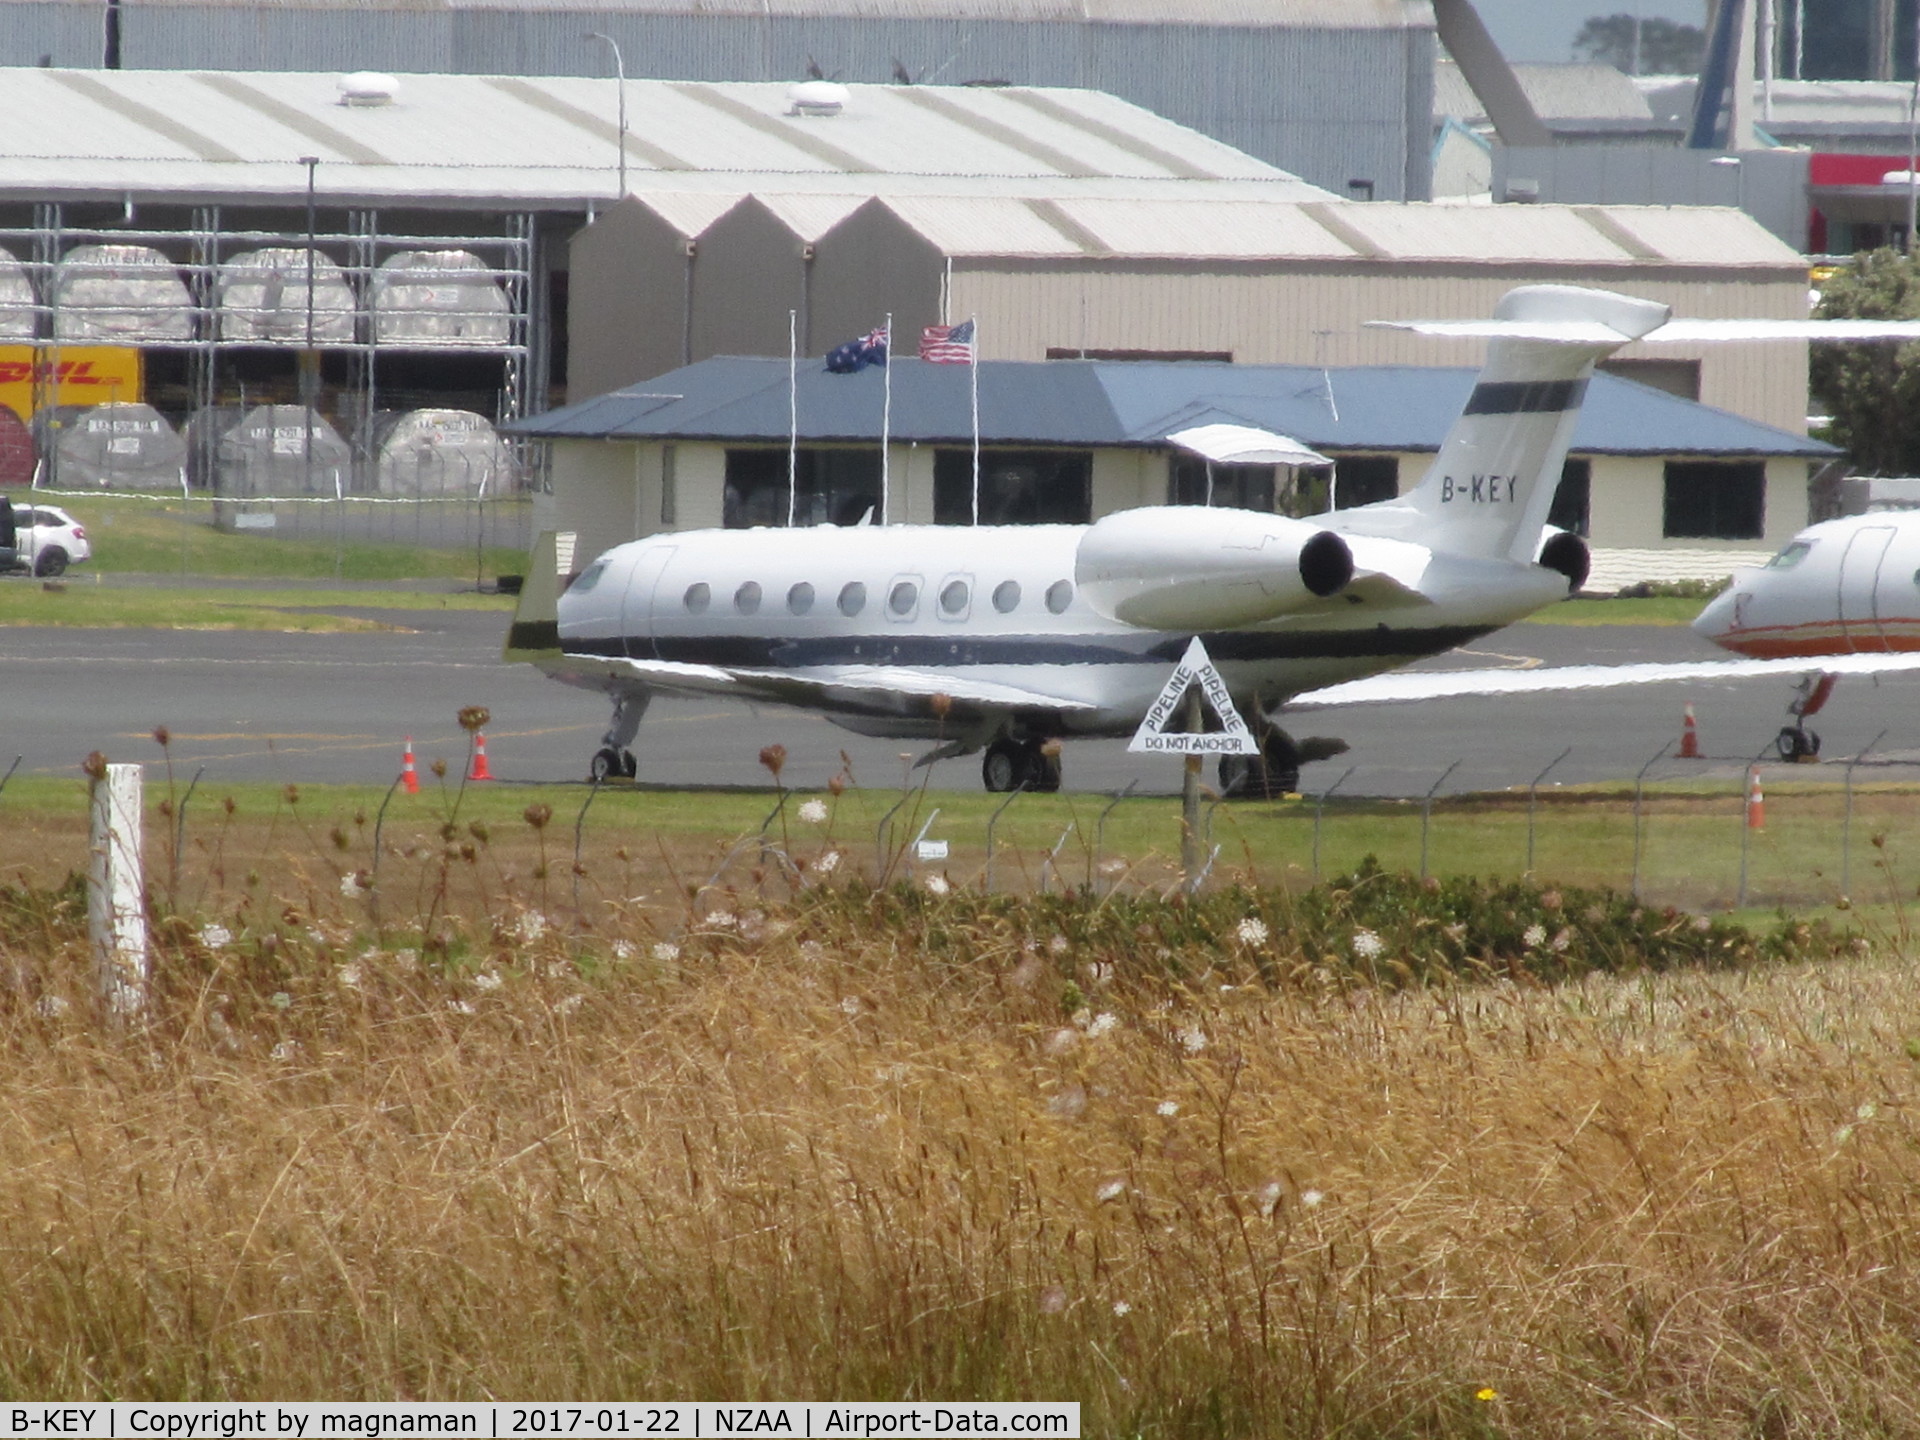 B-KEY, 2014 Gulfstream Aerospace G650 (G-VI) C/N 6098, long range view from public viewing car park off puhunui road